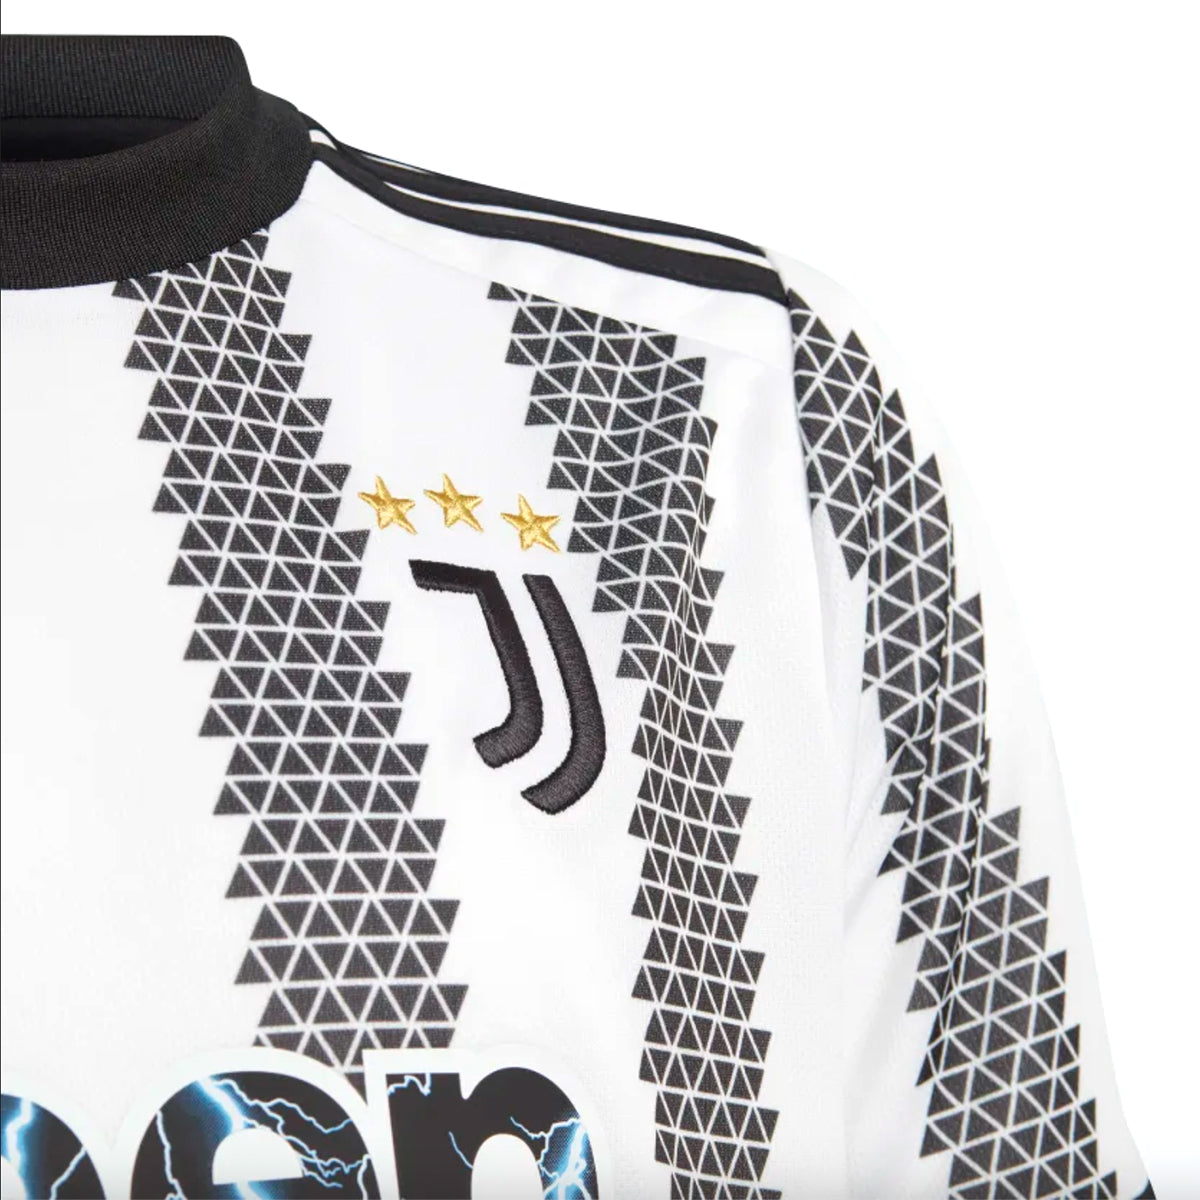 adidas Juventus 22/23 Home Shirt Unveiled - SoccerBible